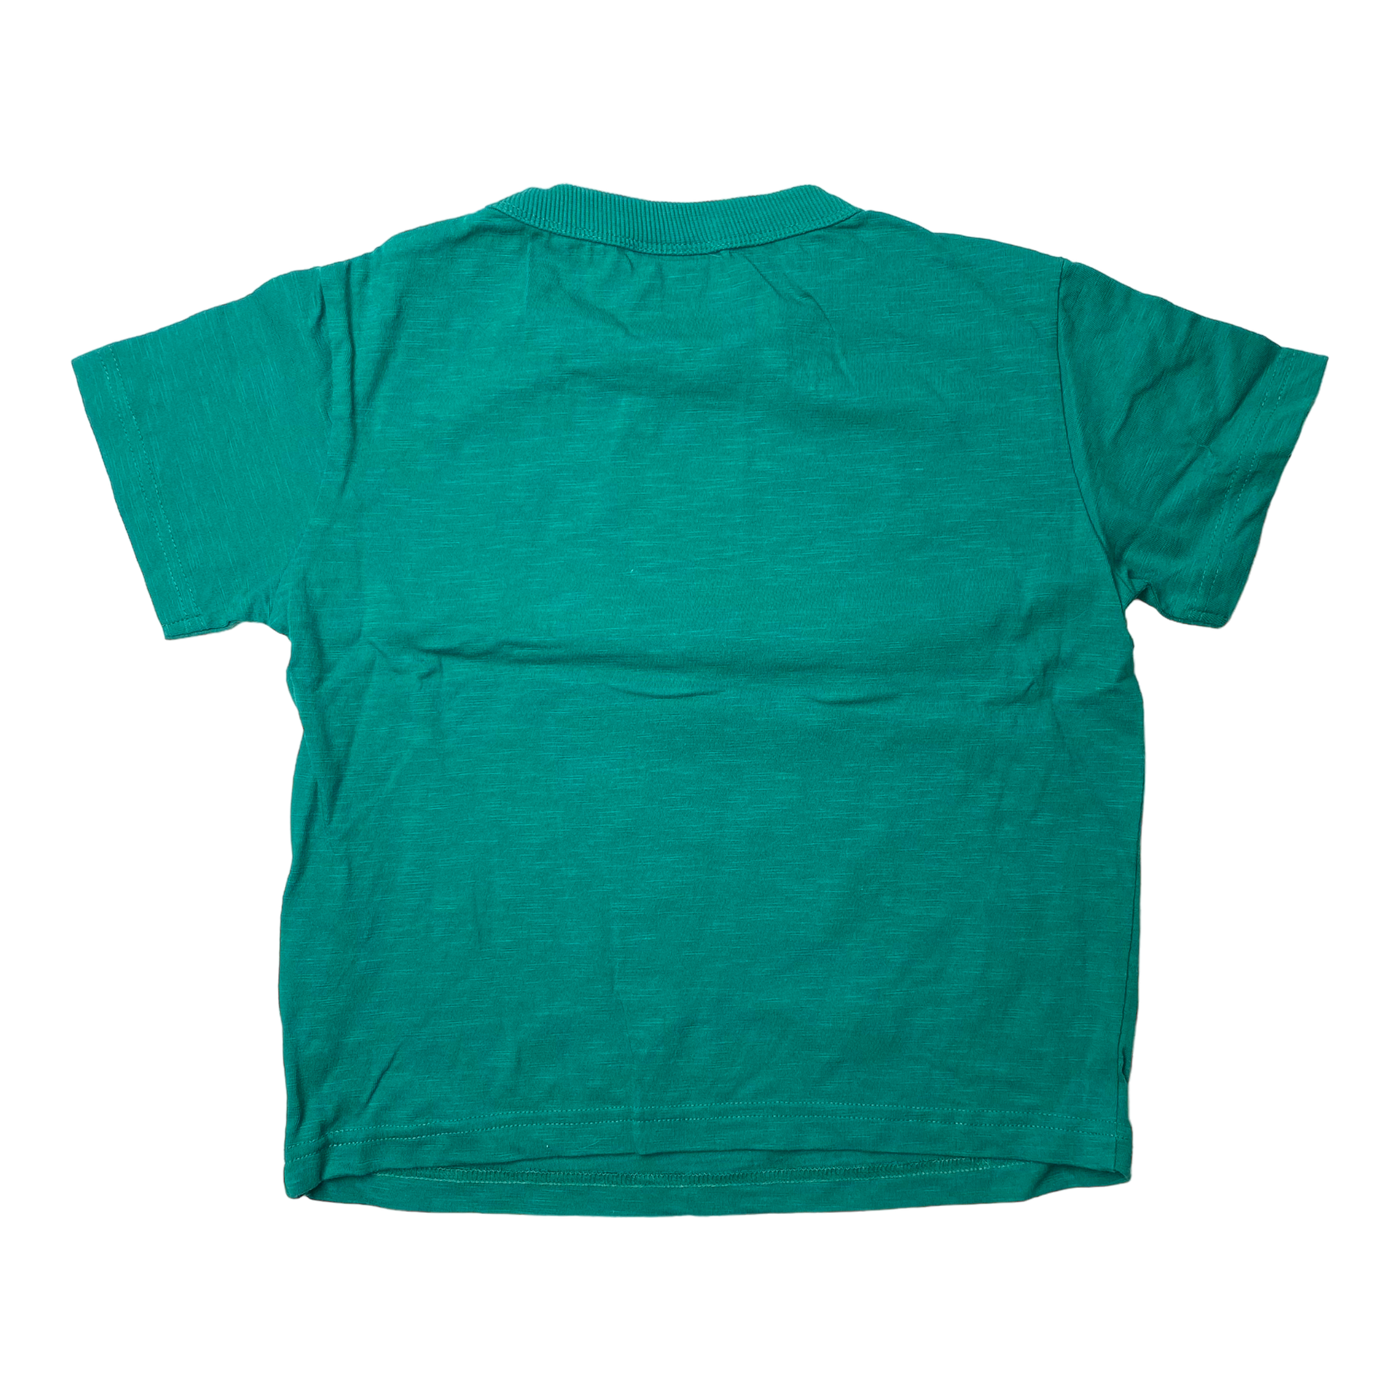 Mainio t-shirt, roar | 110/116cm